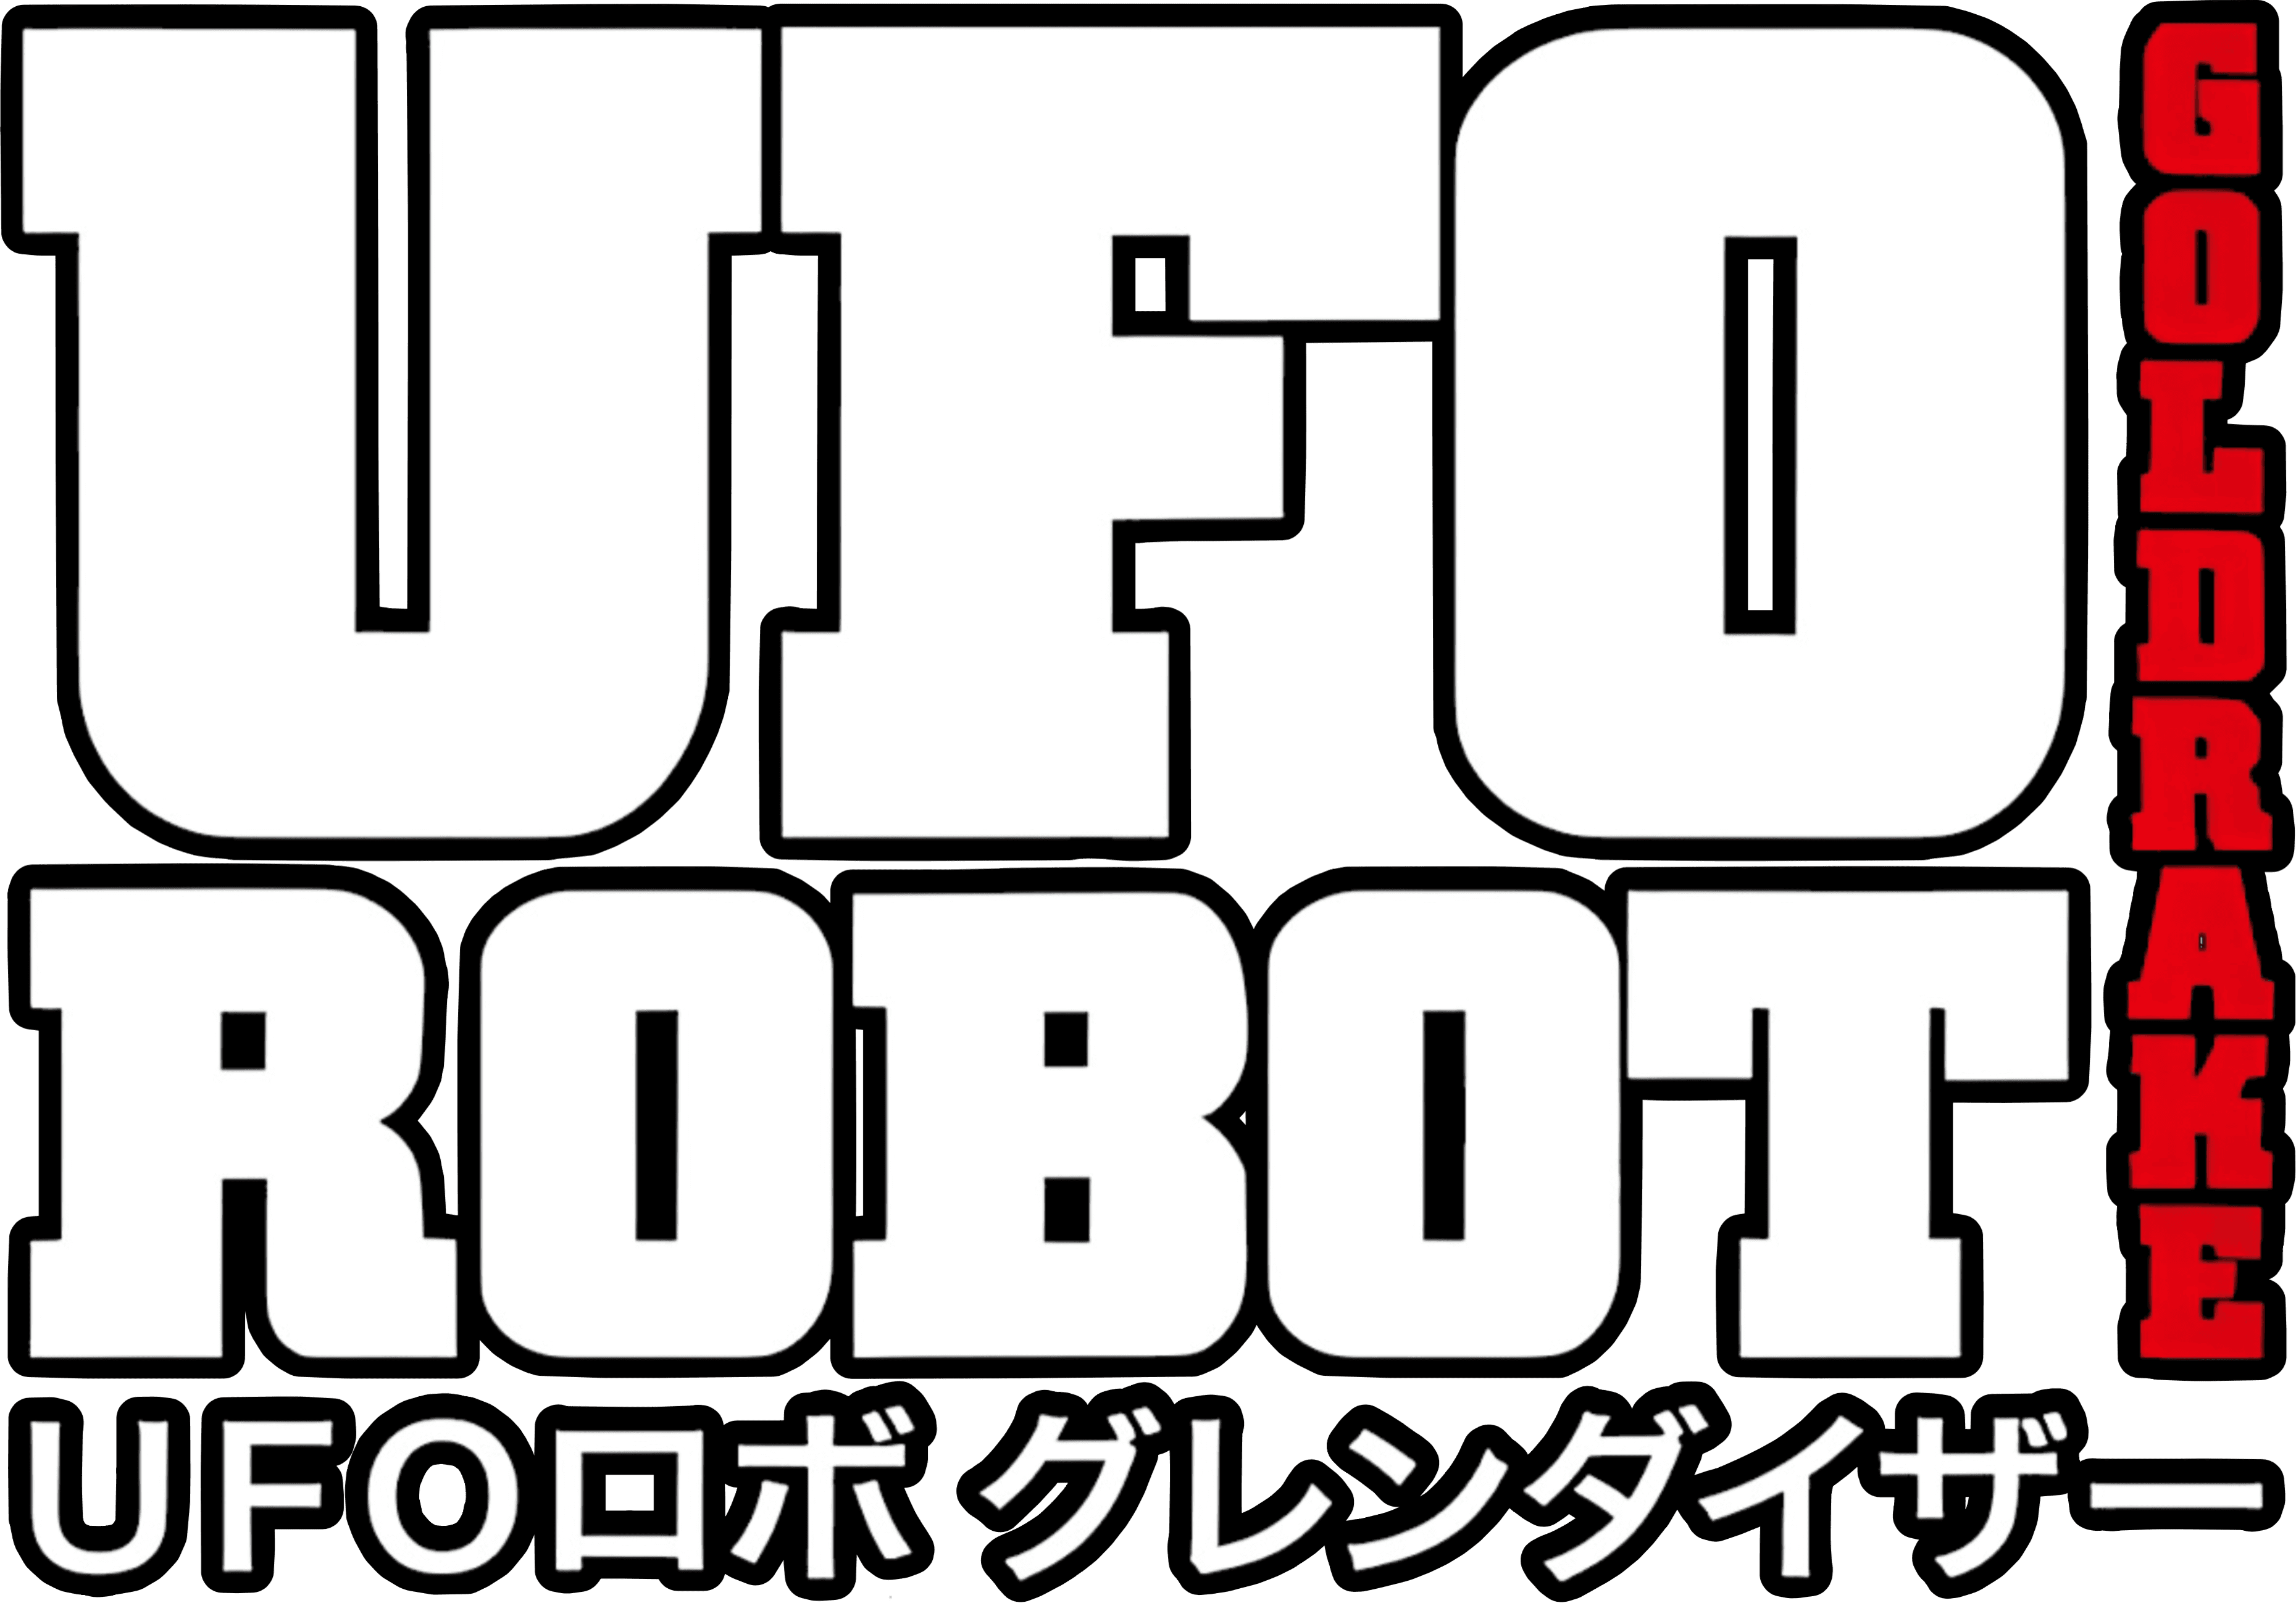 UFO Robot Grendizer logo